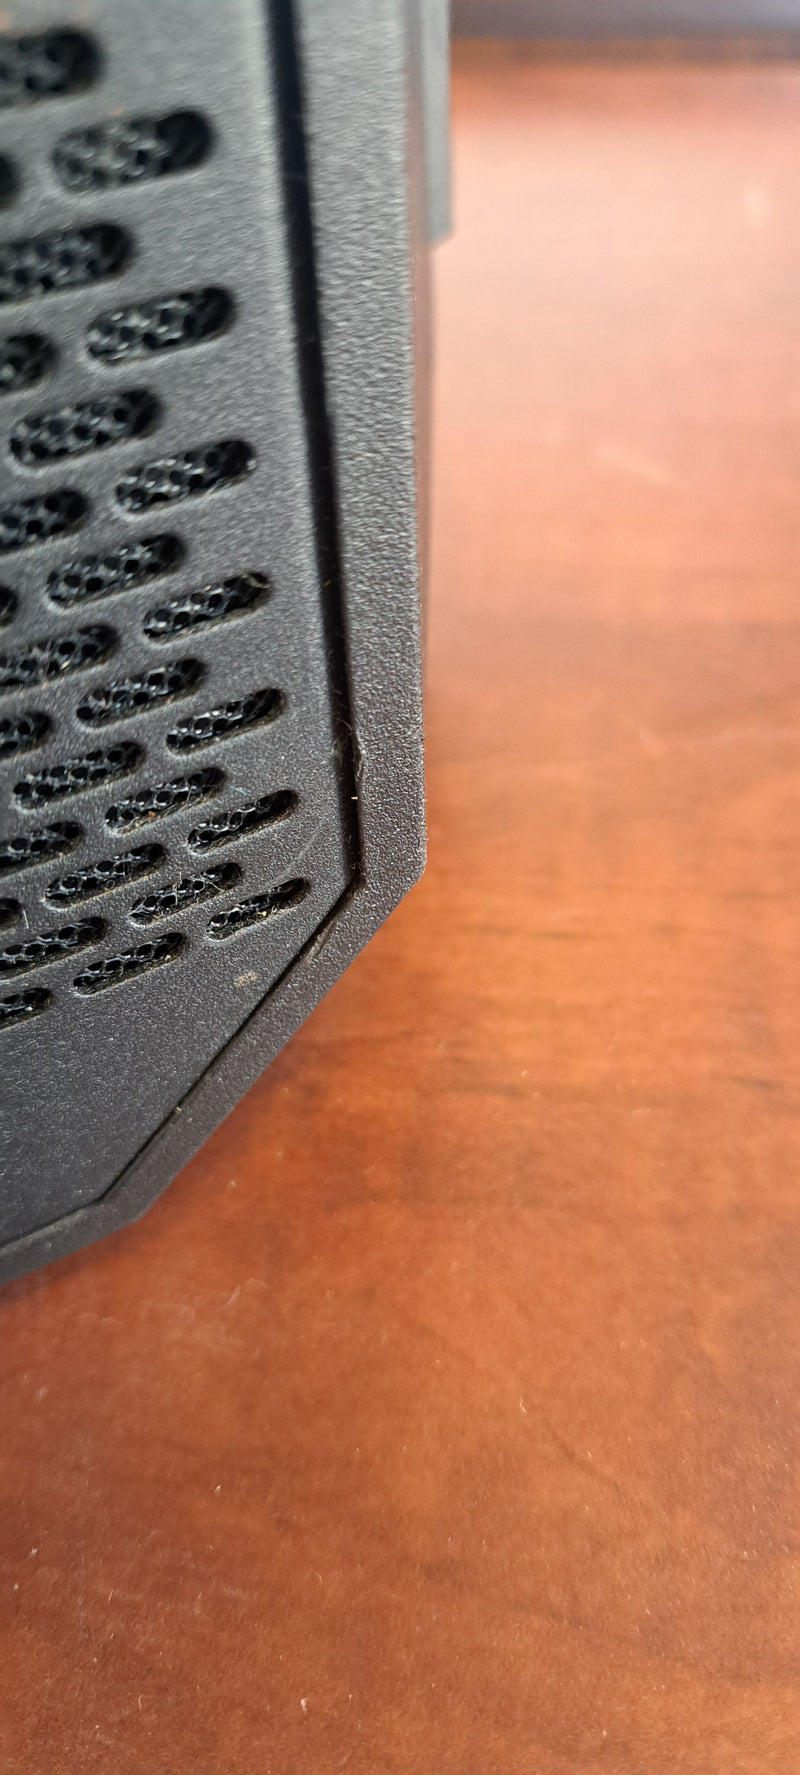 Mackie THUMP GO Portable Battery-Powered Loudspeaker - 8” (USED)